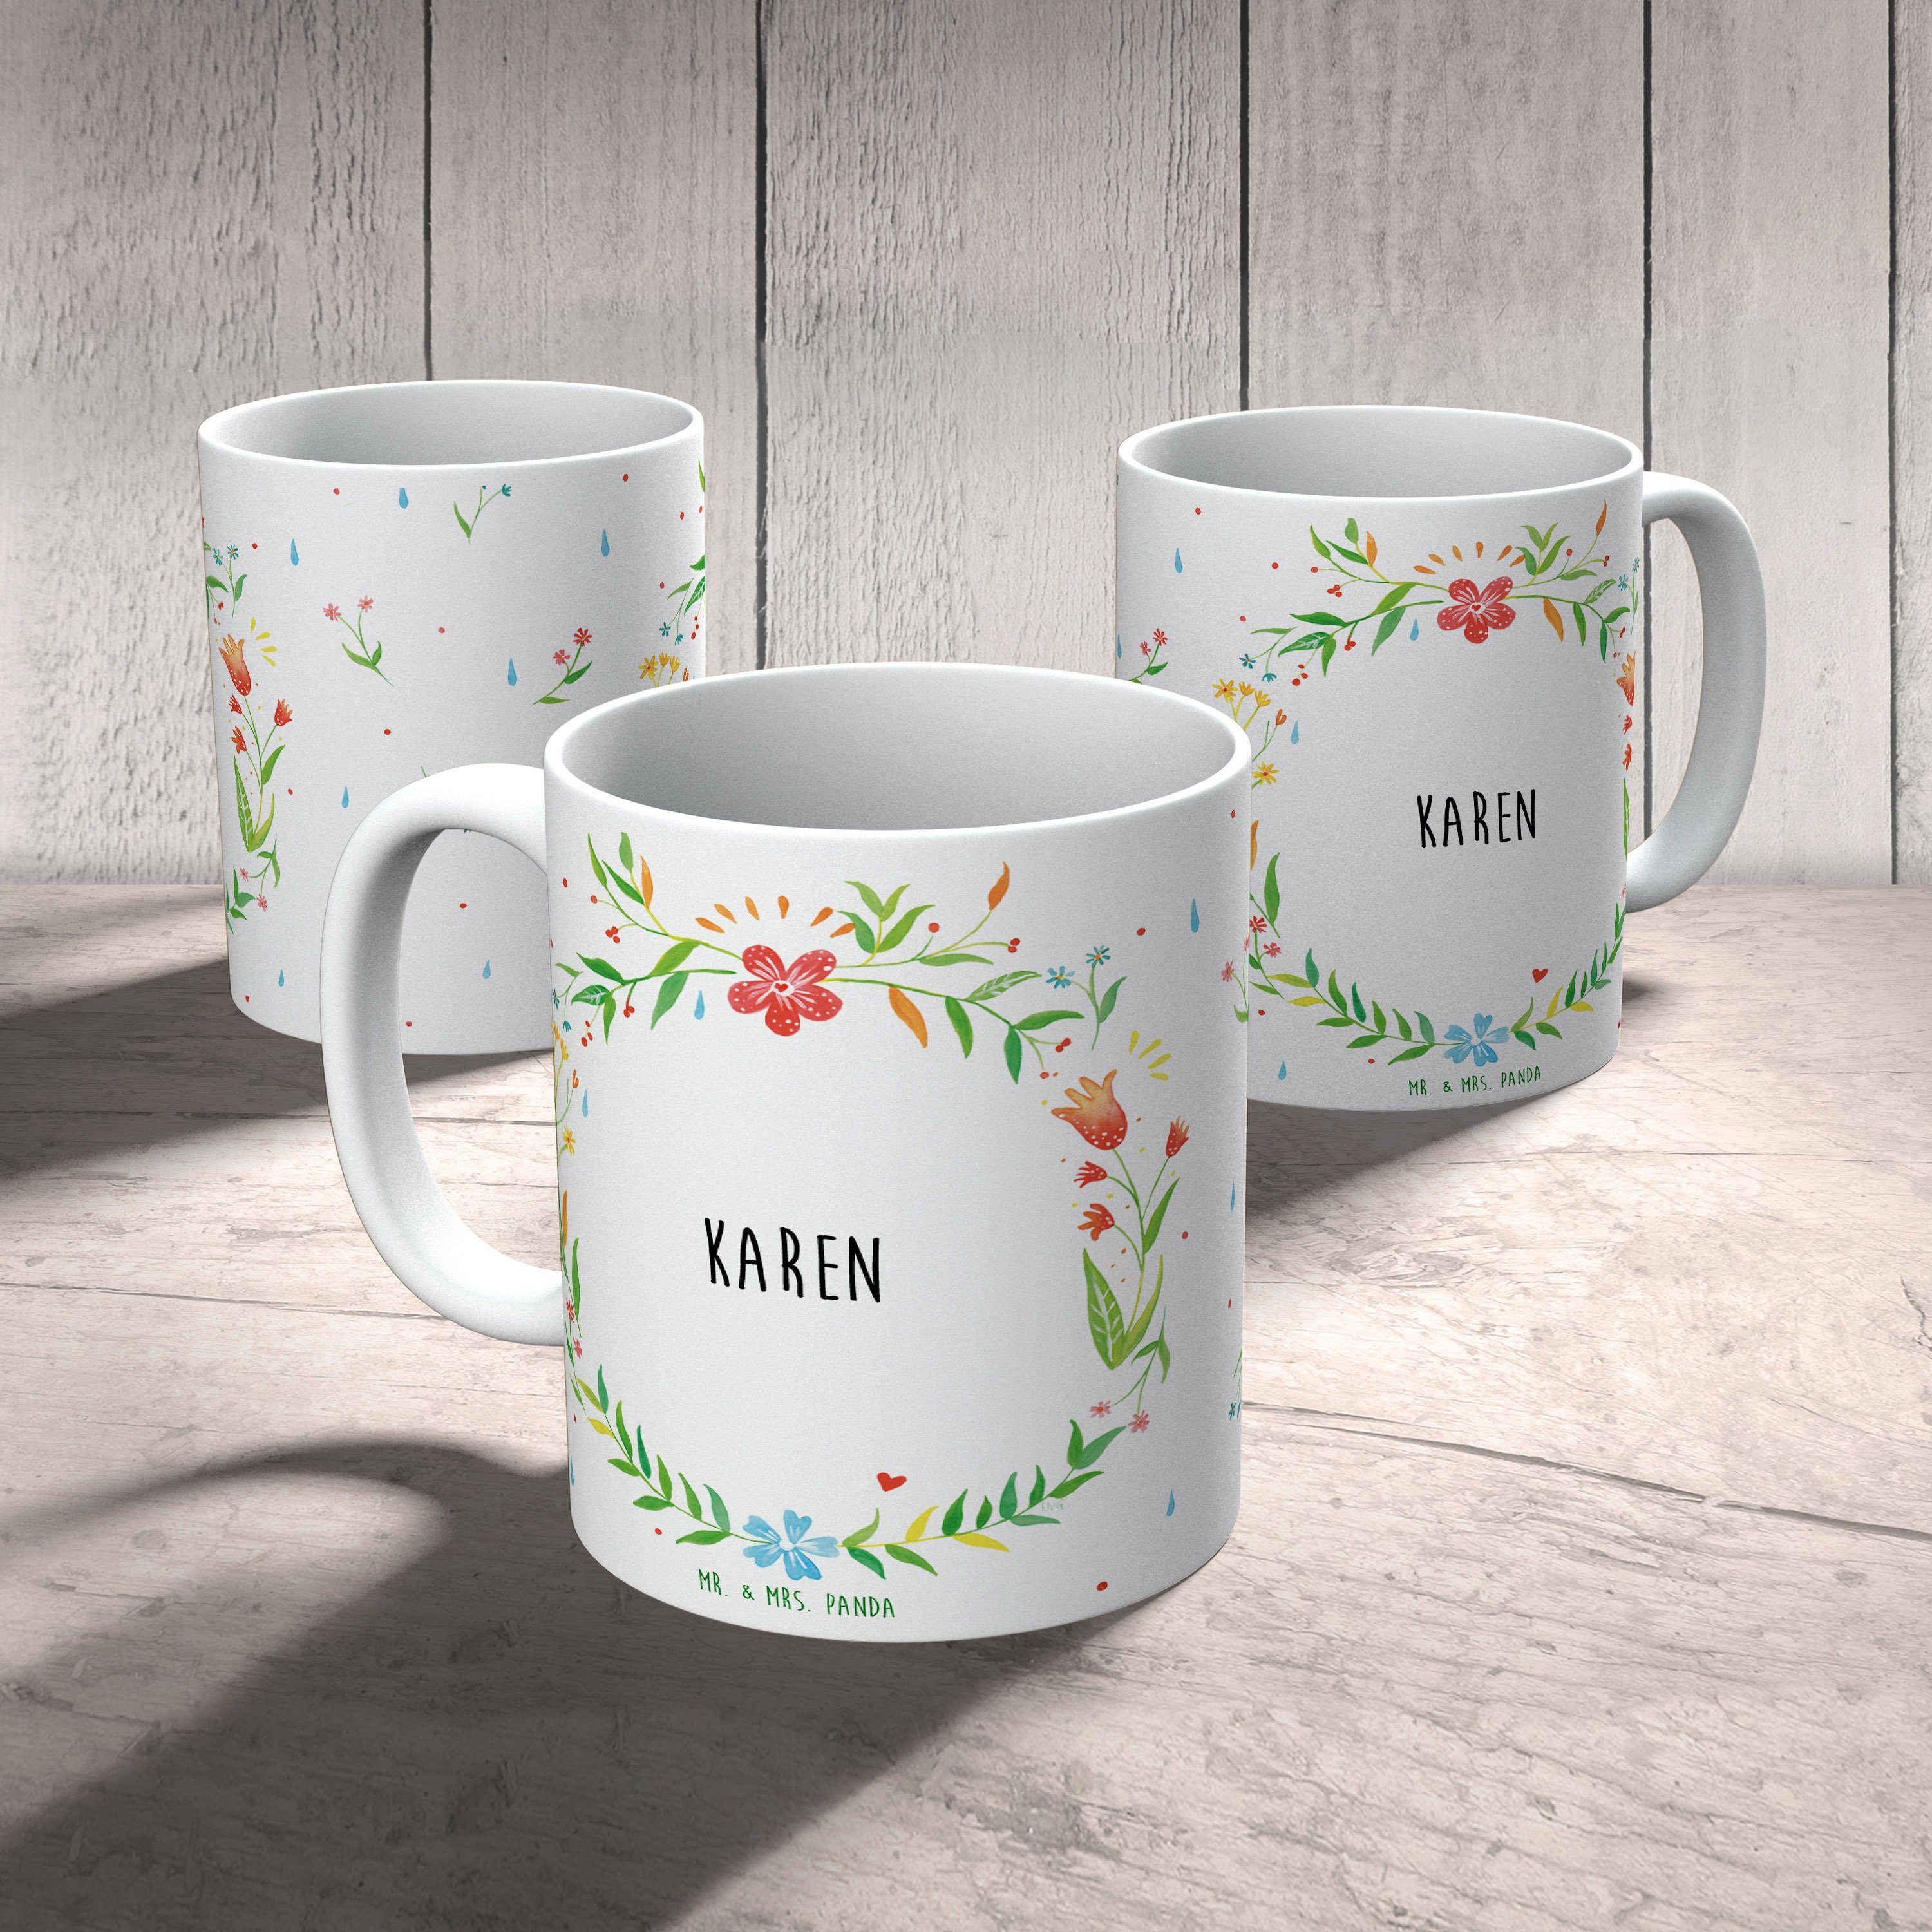 Keramik Tasse Motive, Panda Tasse Keramiktasse, - Geschenk, Teetasse, Sprüche, & Mrs. Karen Mr. Tasse